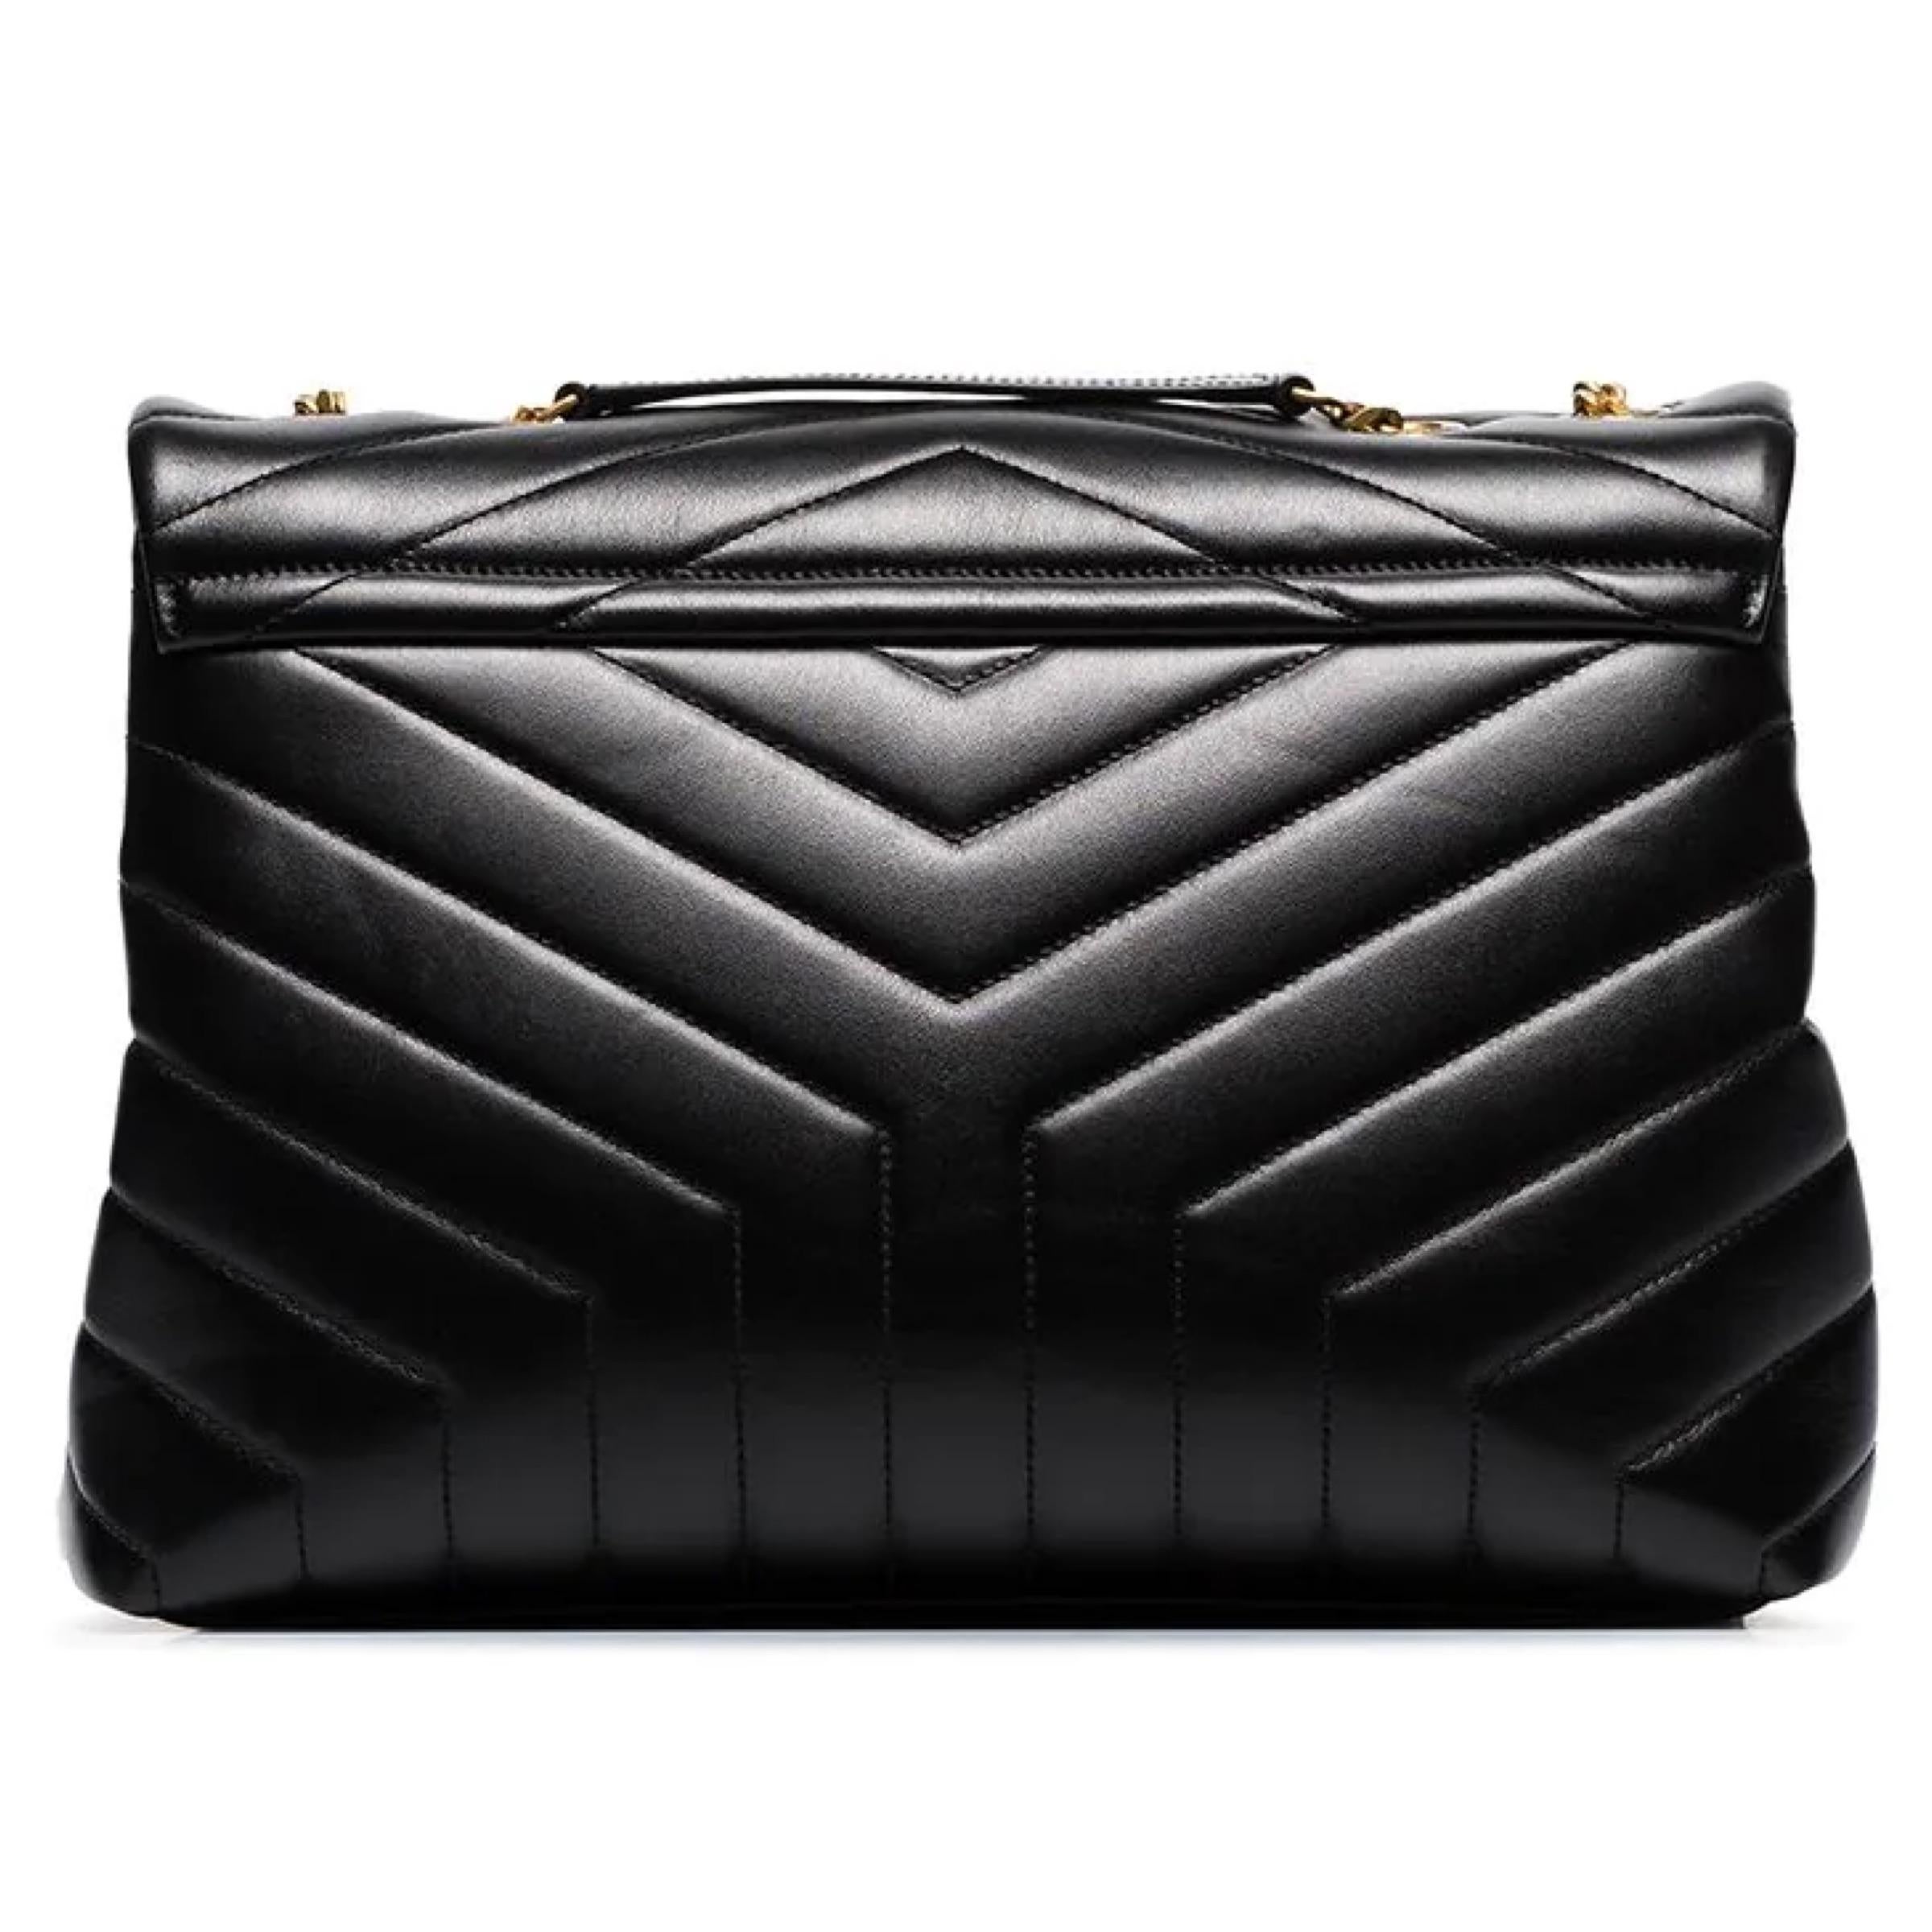 NEW Saint Laurent Black Medium Loulou Quilted Leather Shoulder Bag For Sale 3